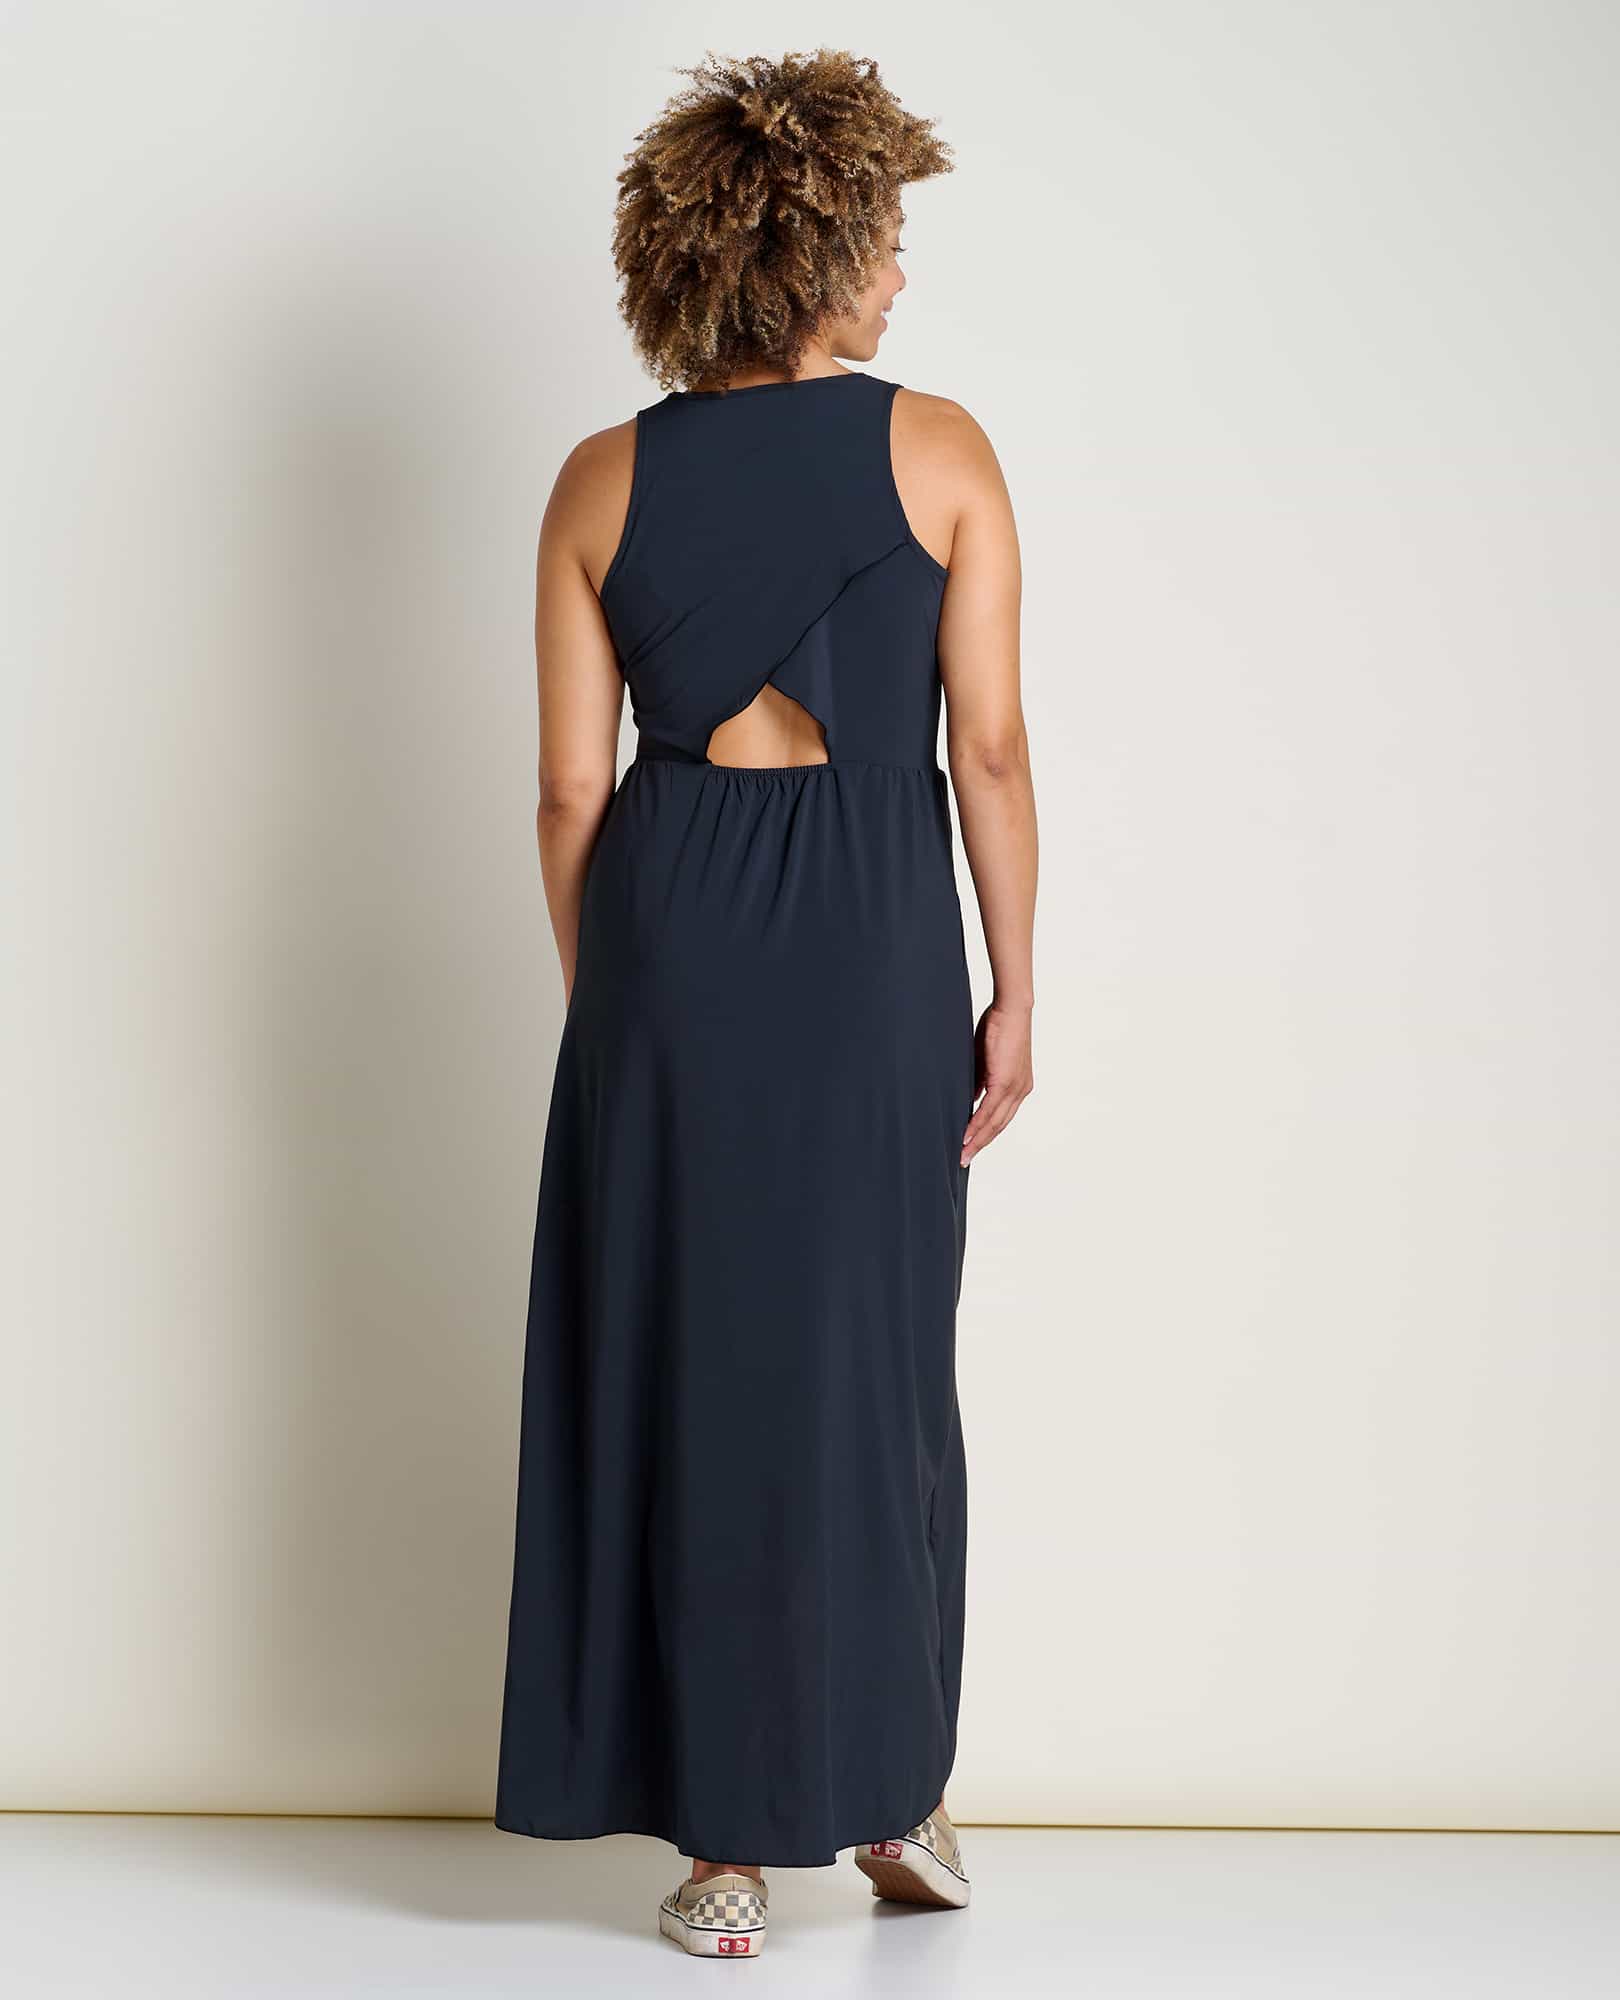 Sleeveless Black Summer Maxi Dress Side Open Legs Adjustable